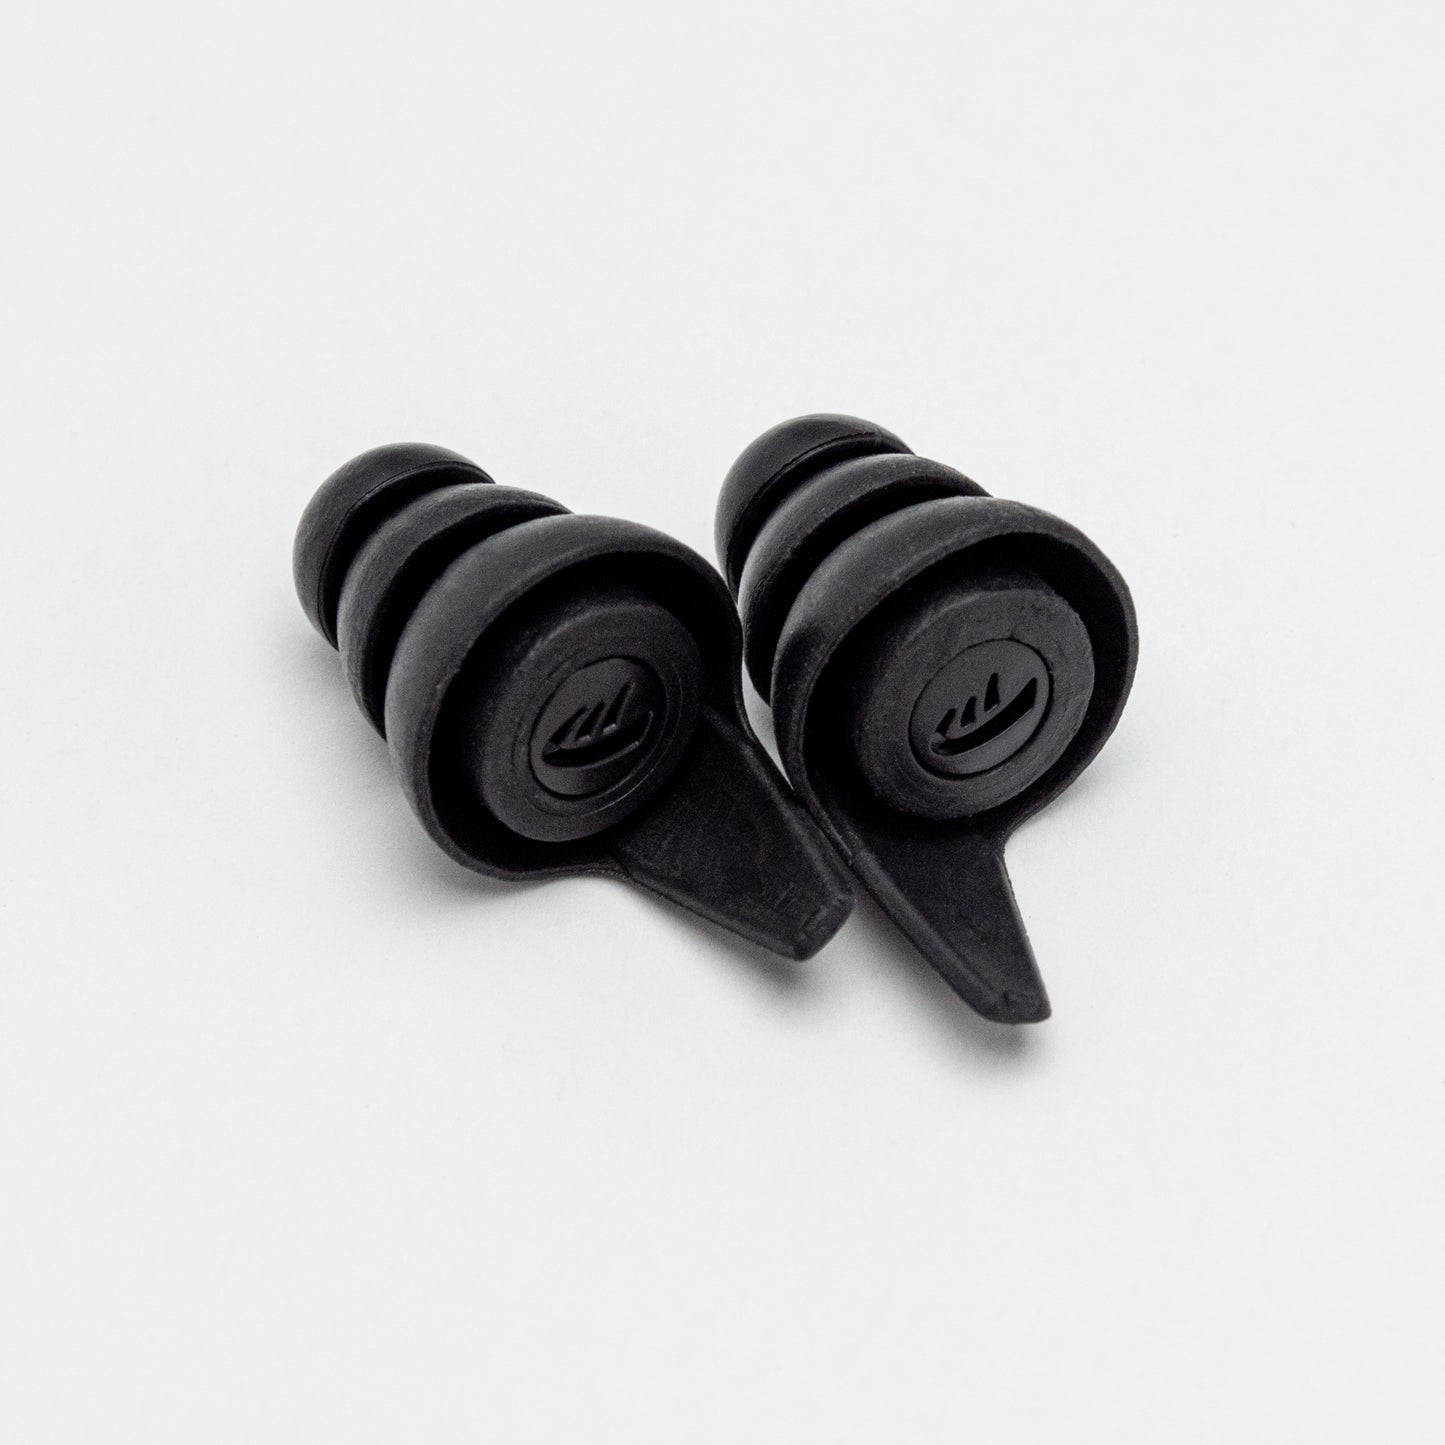 Ear Tips for OtoPro Impulse Filters